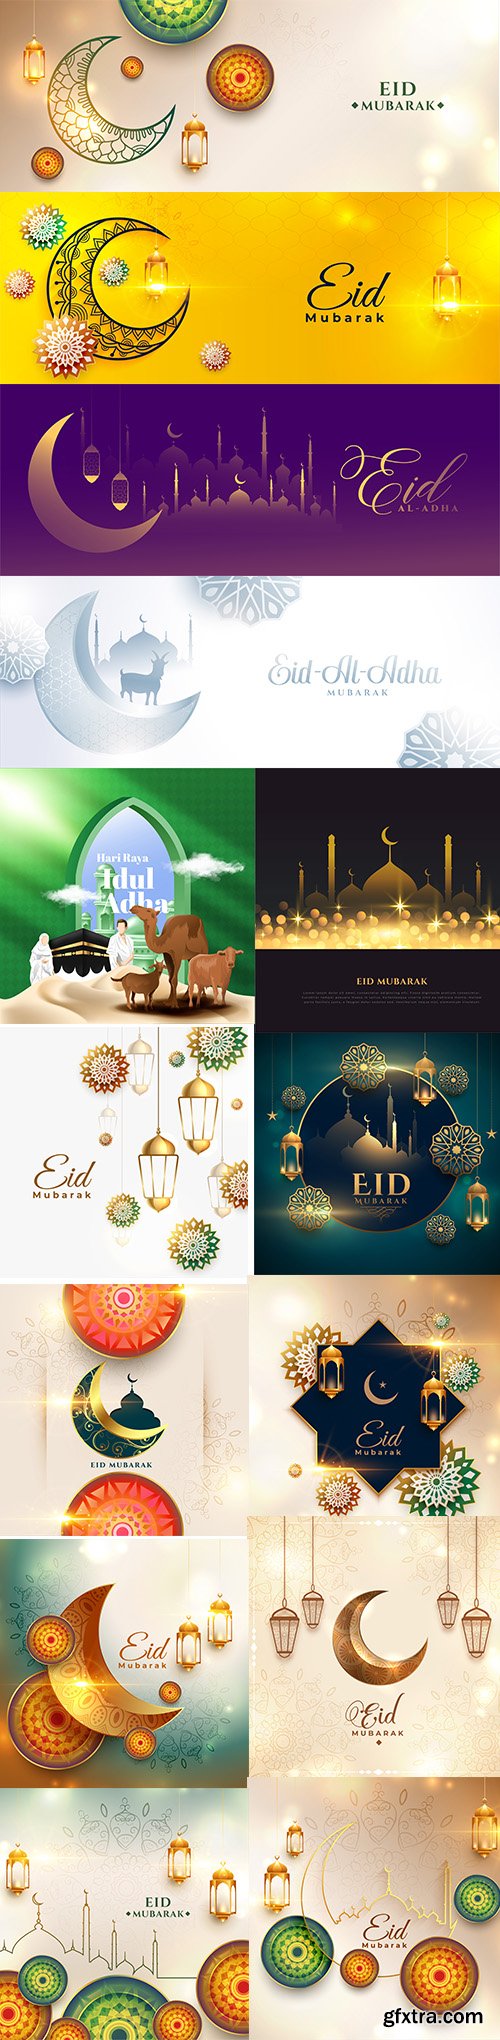 Eid mubarak banner with beautiful colors vol2